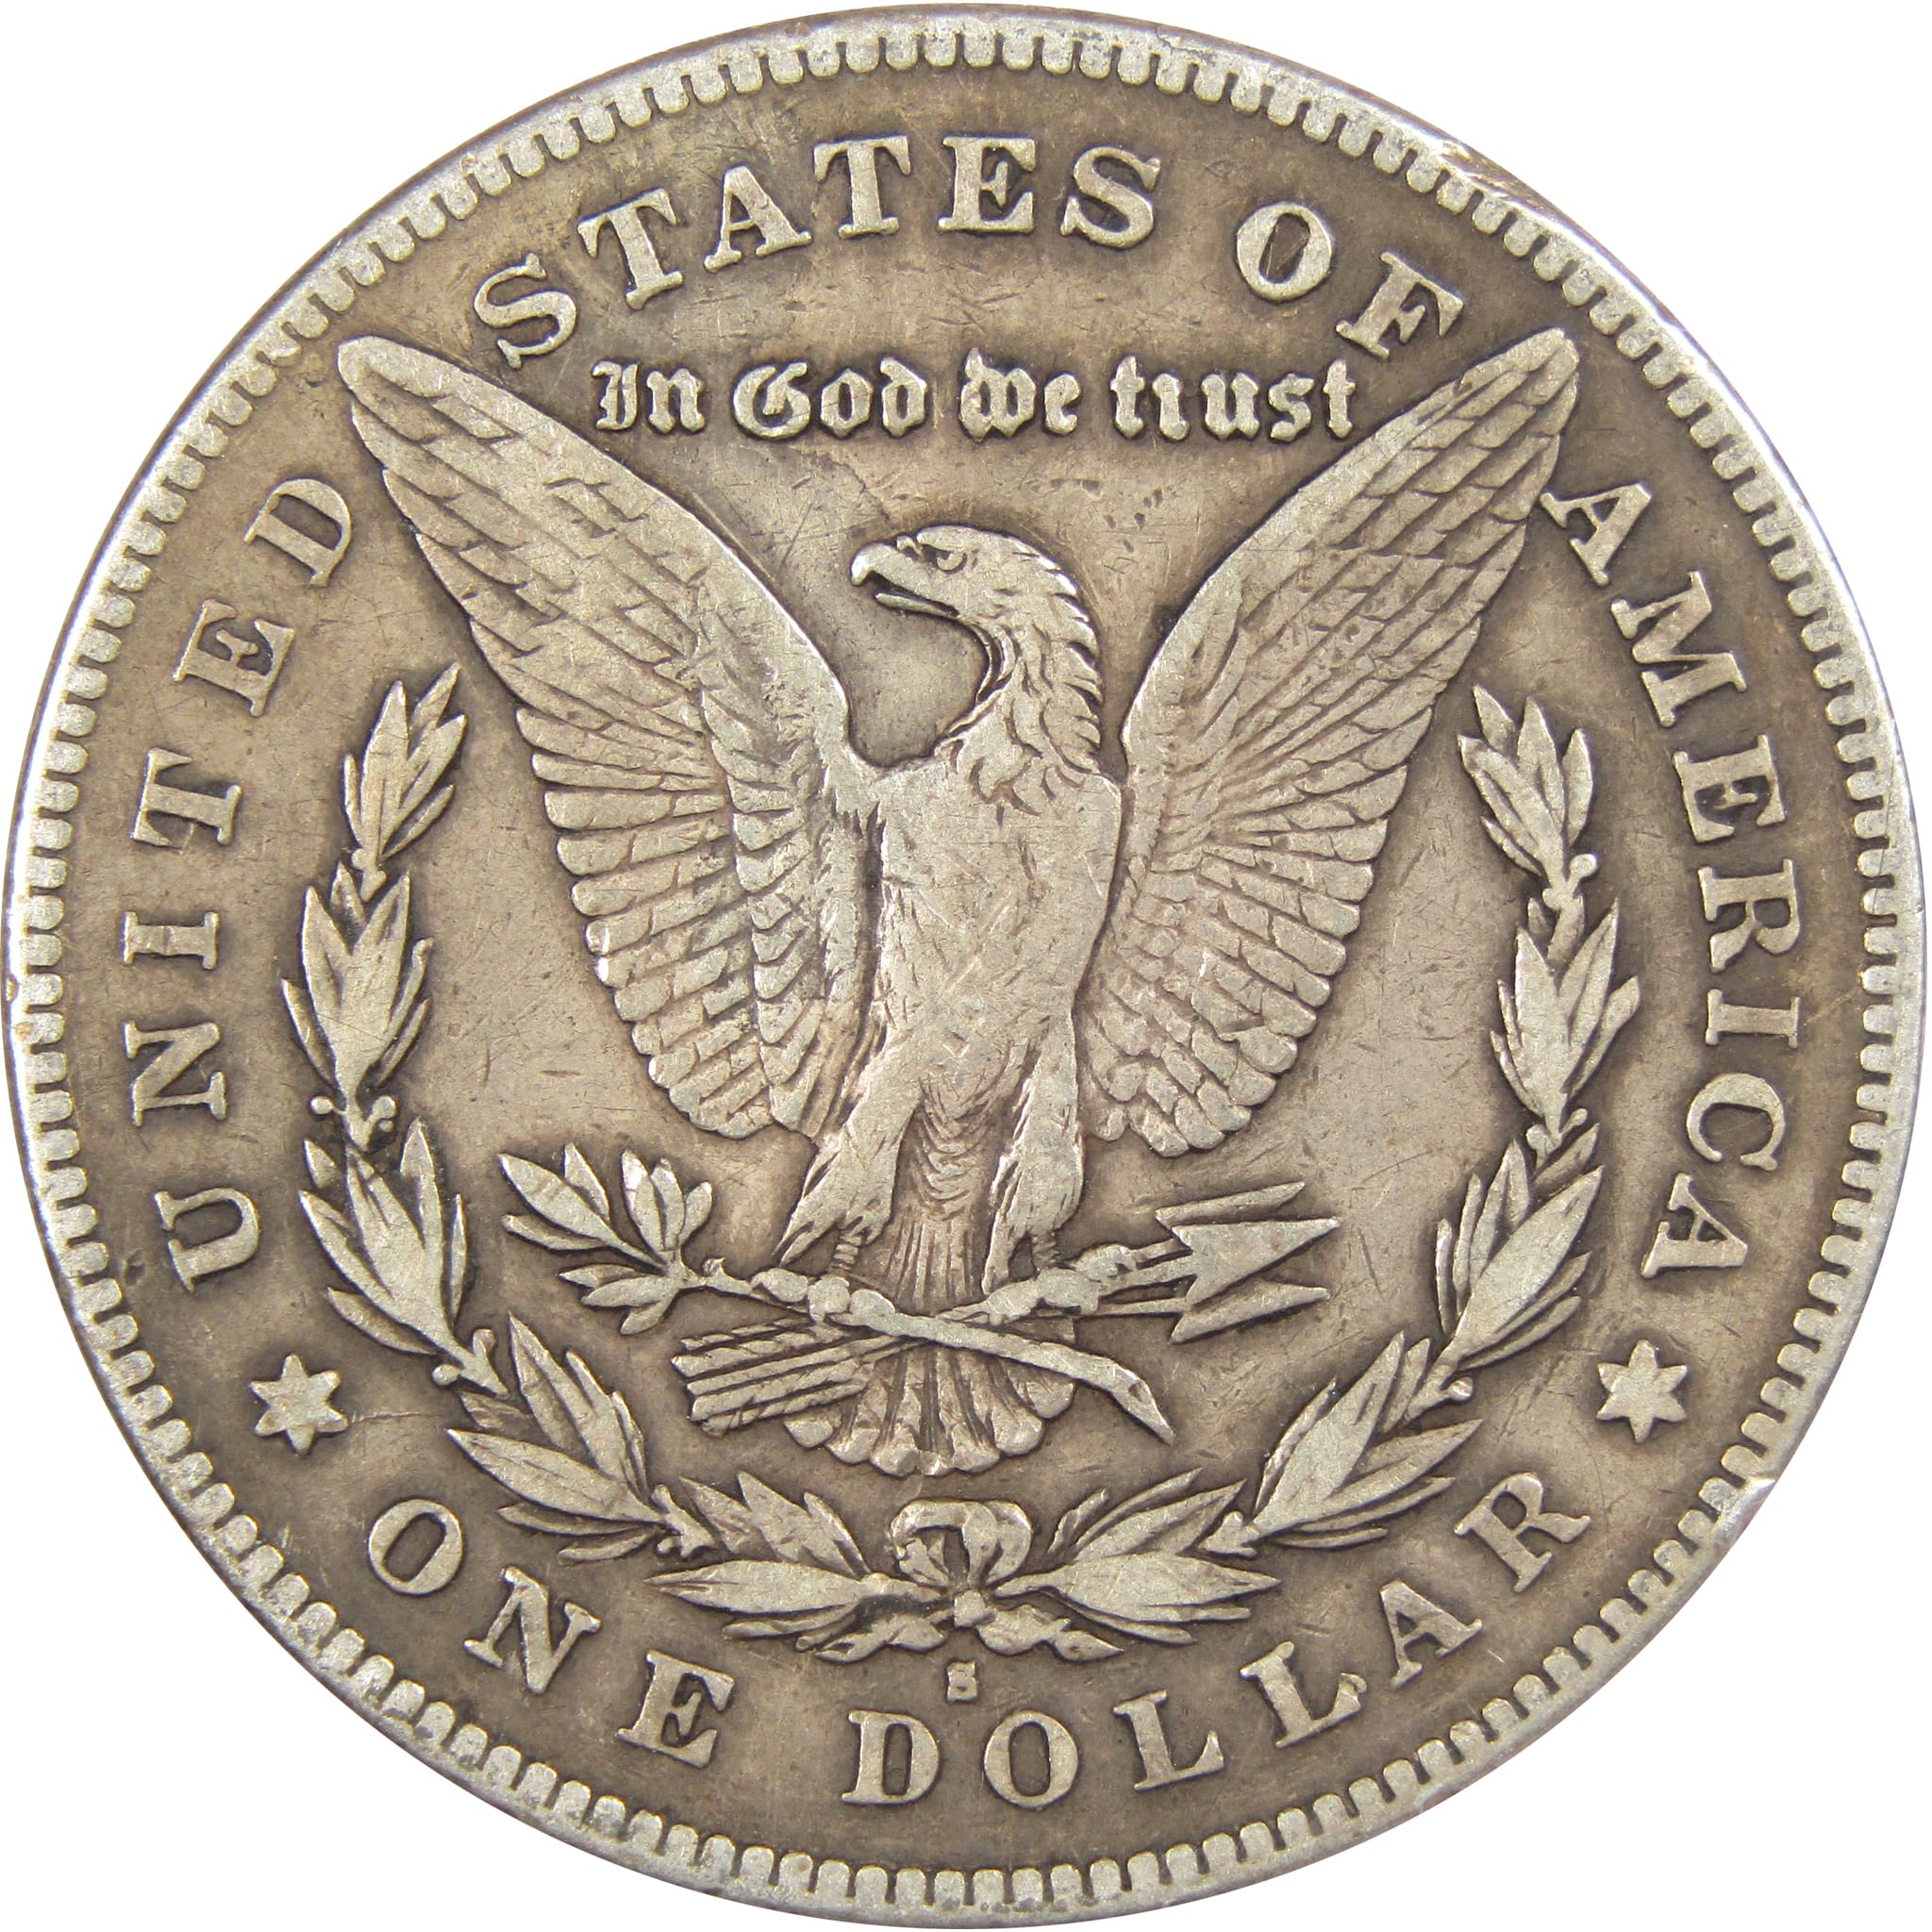 1879 S Rev 78 Morgan Dollar VF Very Fine 90% Silver SKU:IPC7458 - Morgan coin - Morgan silver dollar - Morgan silver dollar for sale - Profile Coins &amp; Collectibles